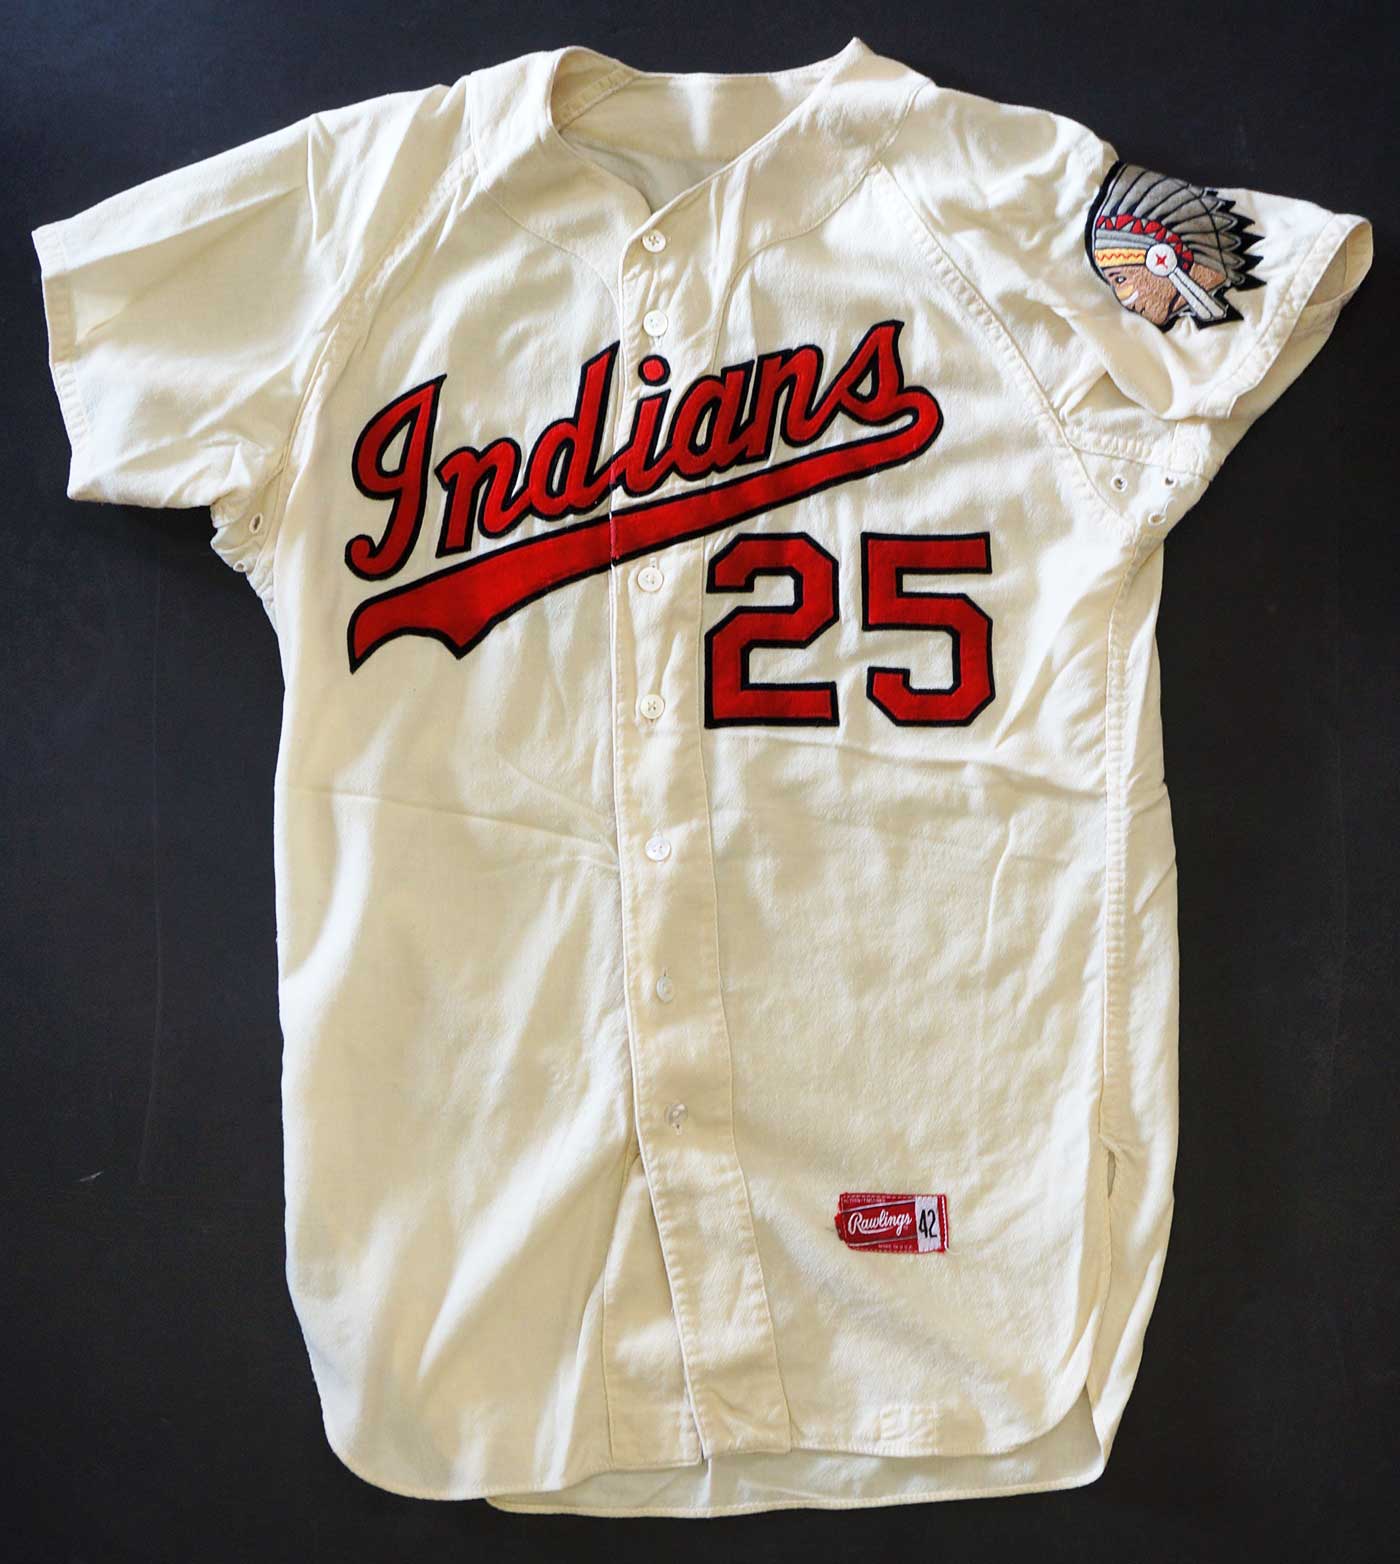 Spokane Indians Vintage Game-Used Home Jersey